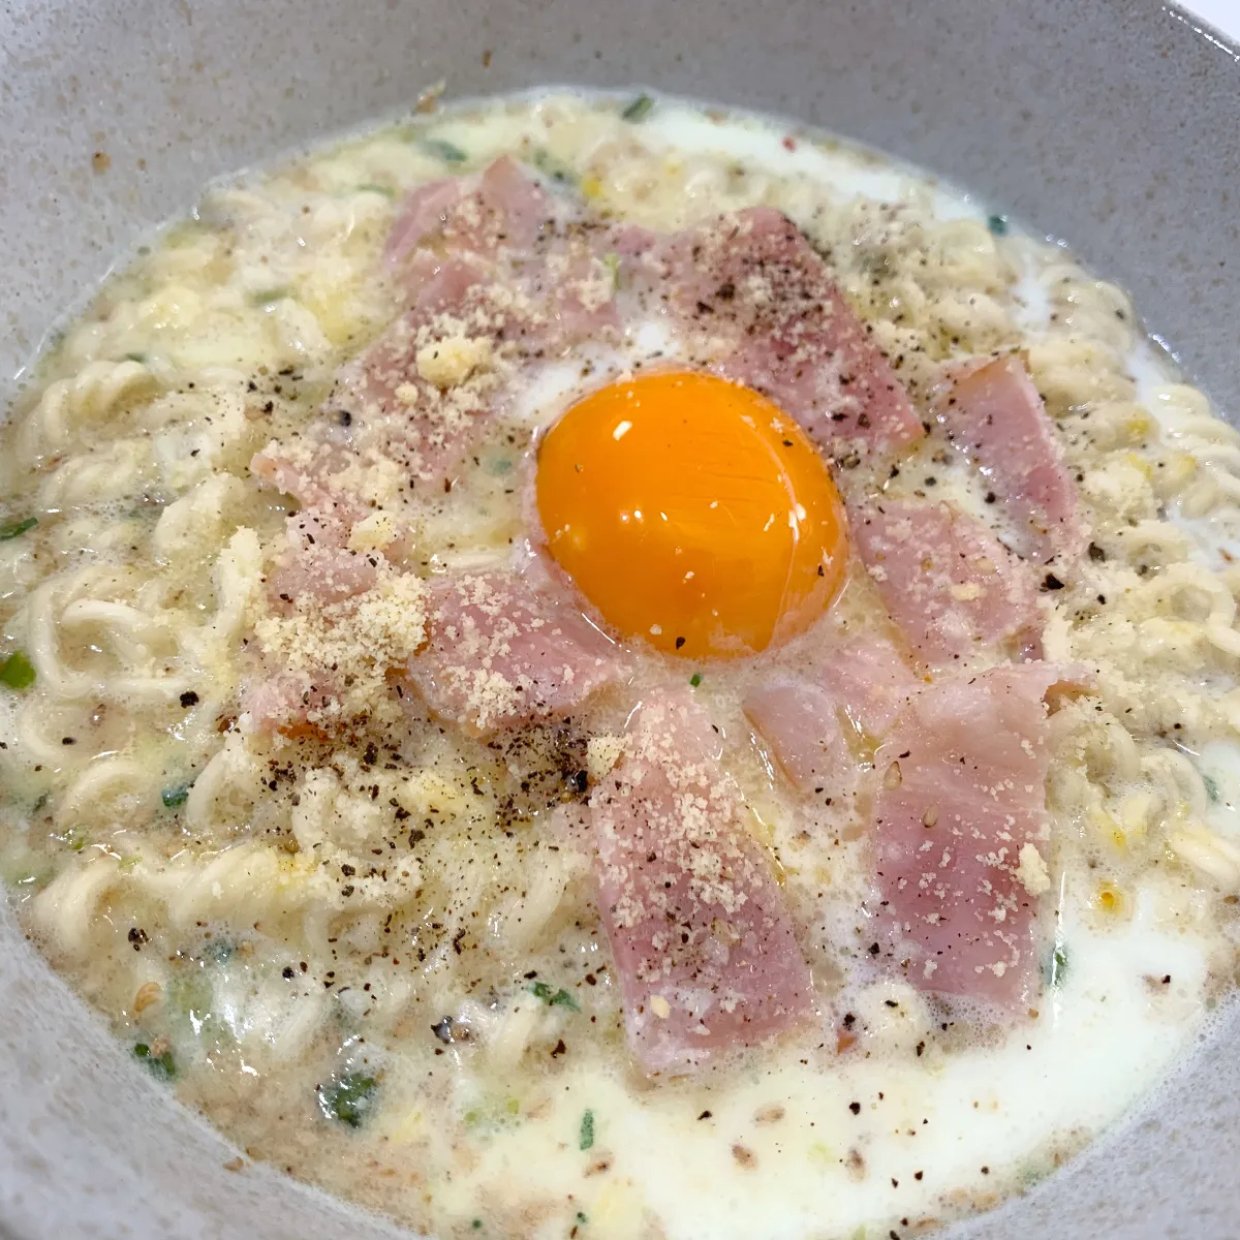  【Twitterで話題】「レンジ濃厚塩カルボ麺」は牛乳とインスタント麺でカルボナーラ風に！ 